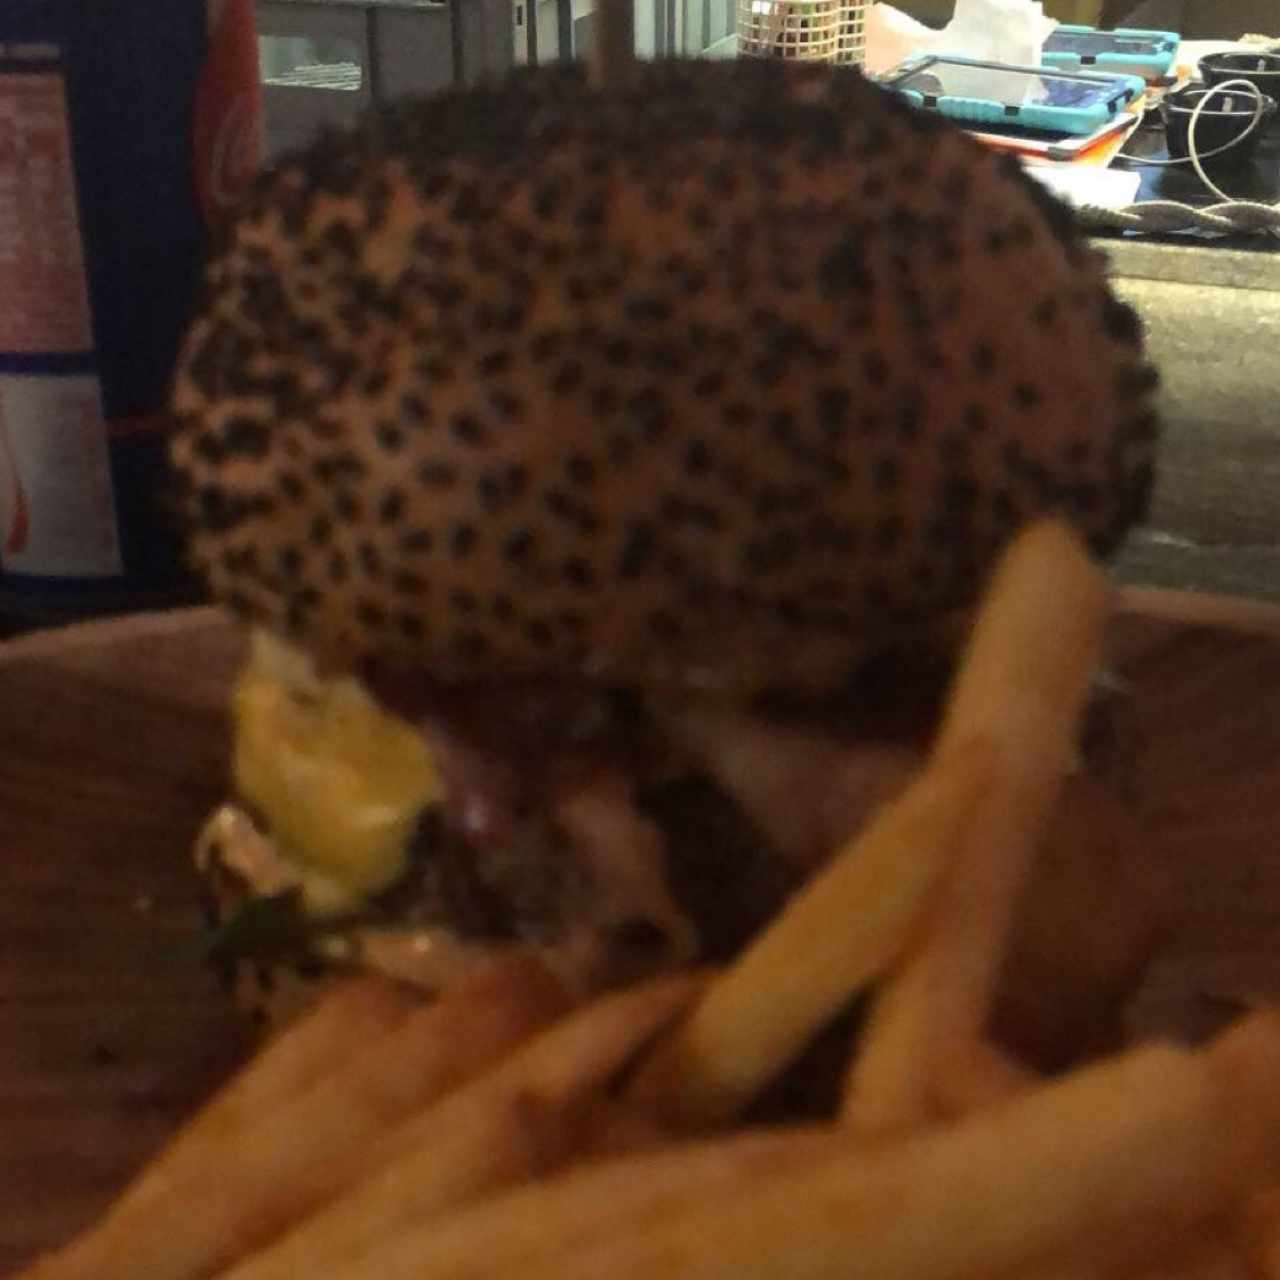 Deathbat burger